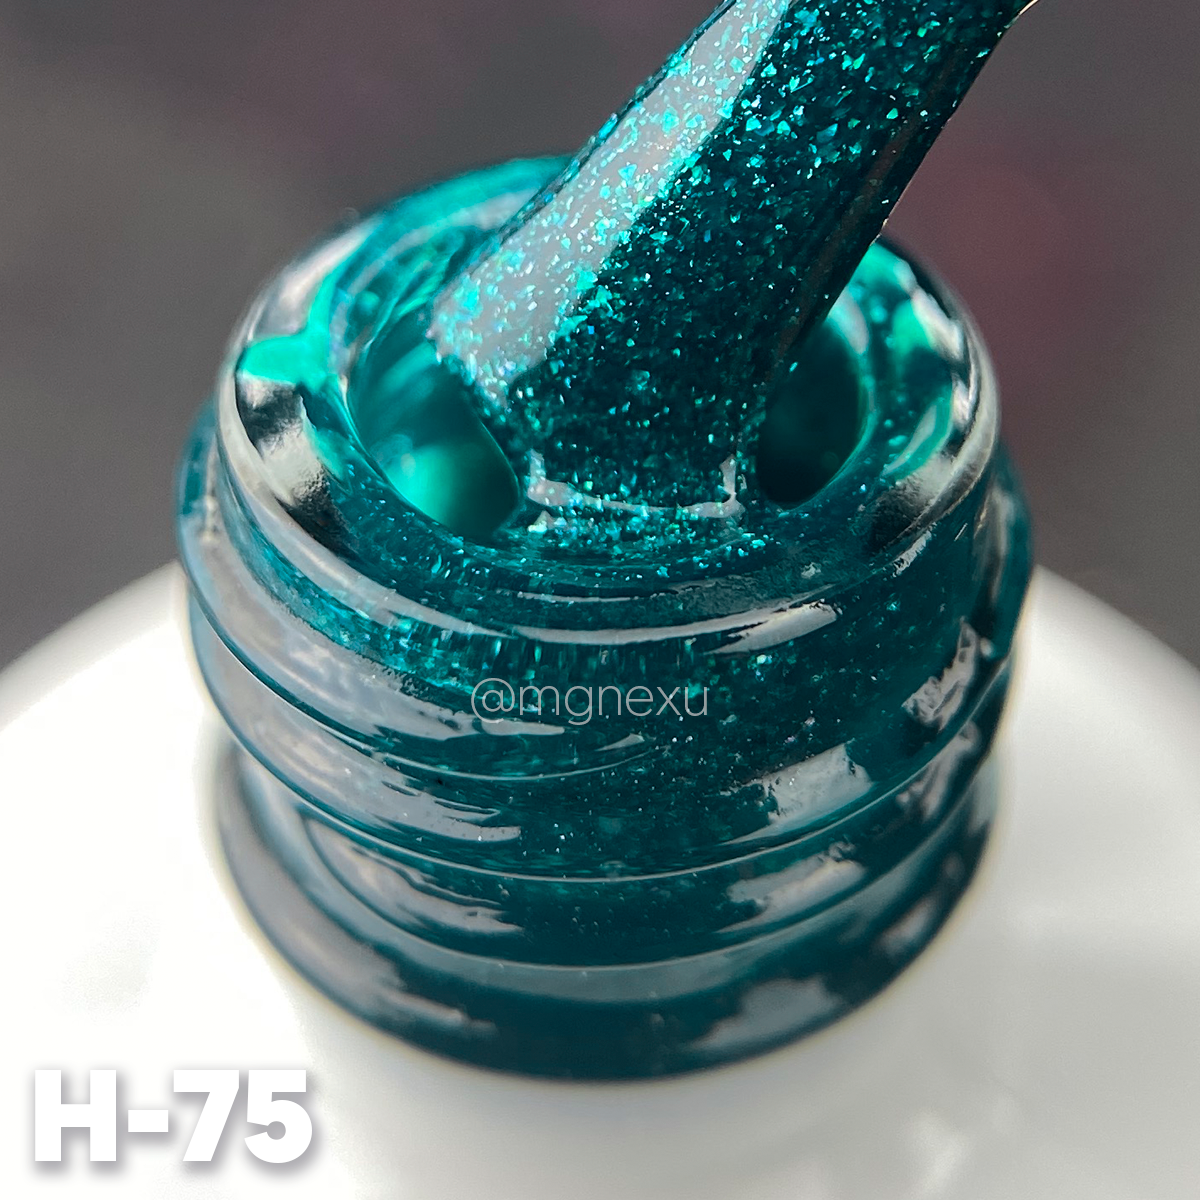 H-75